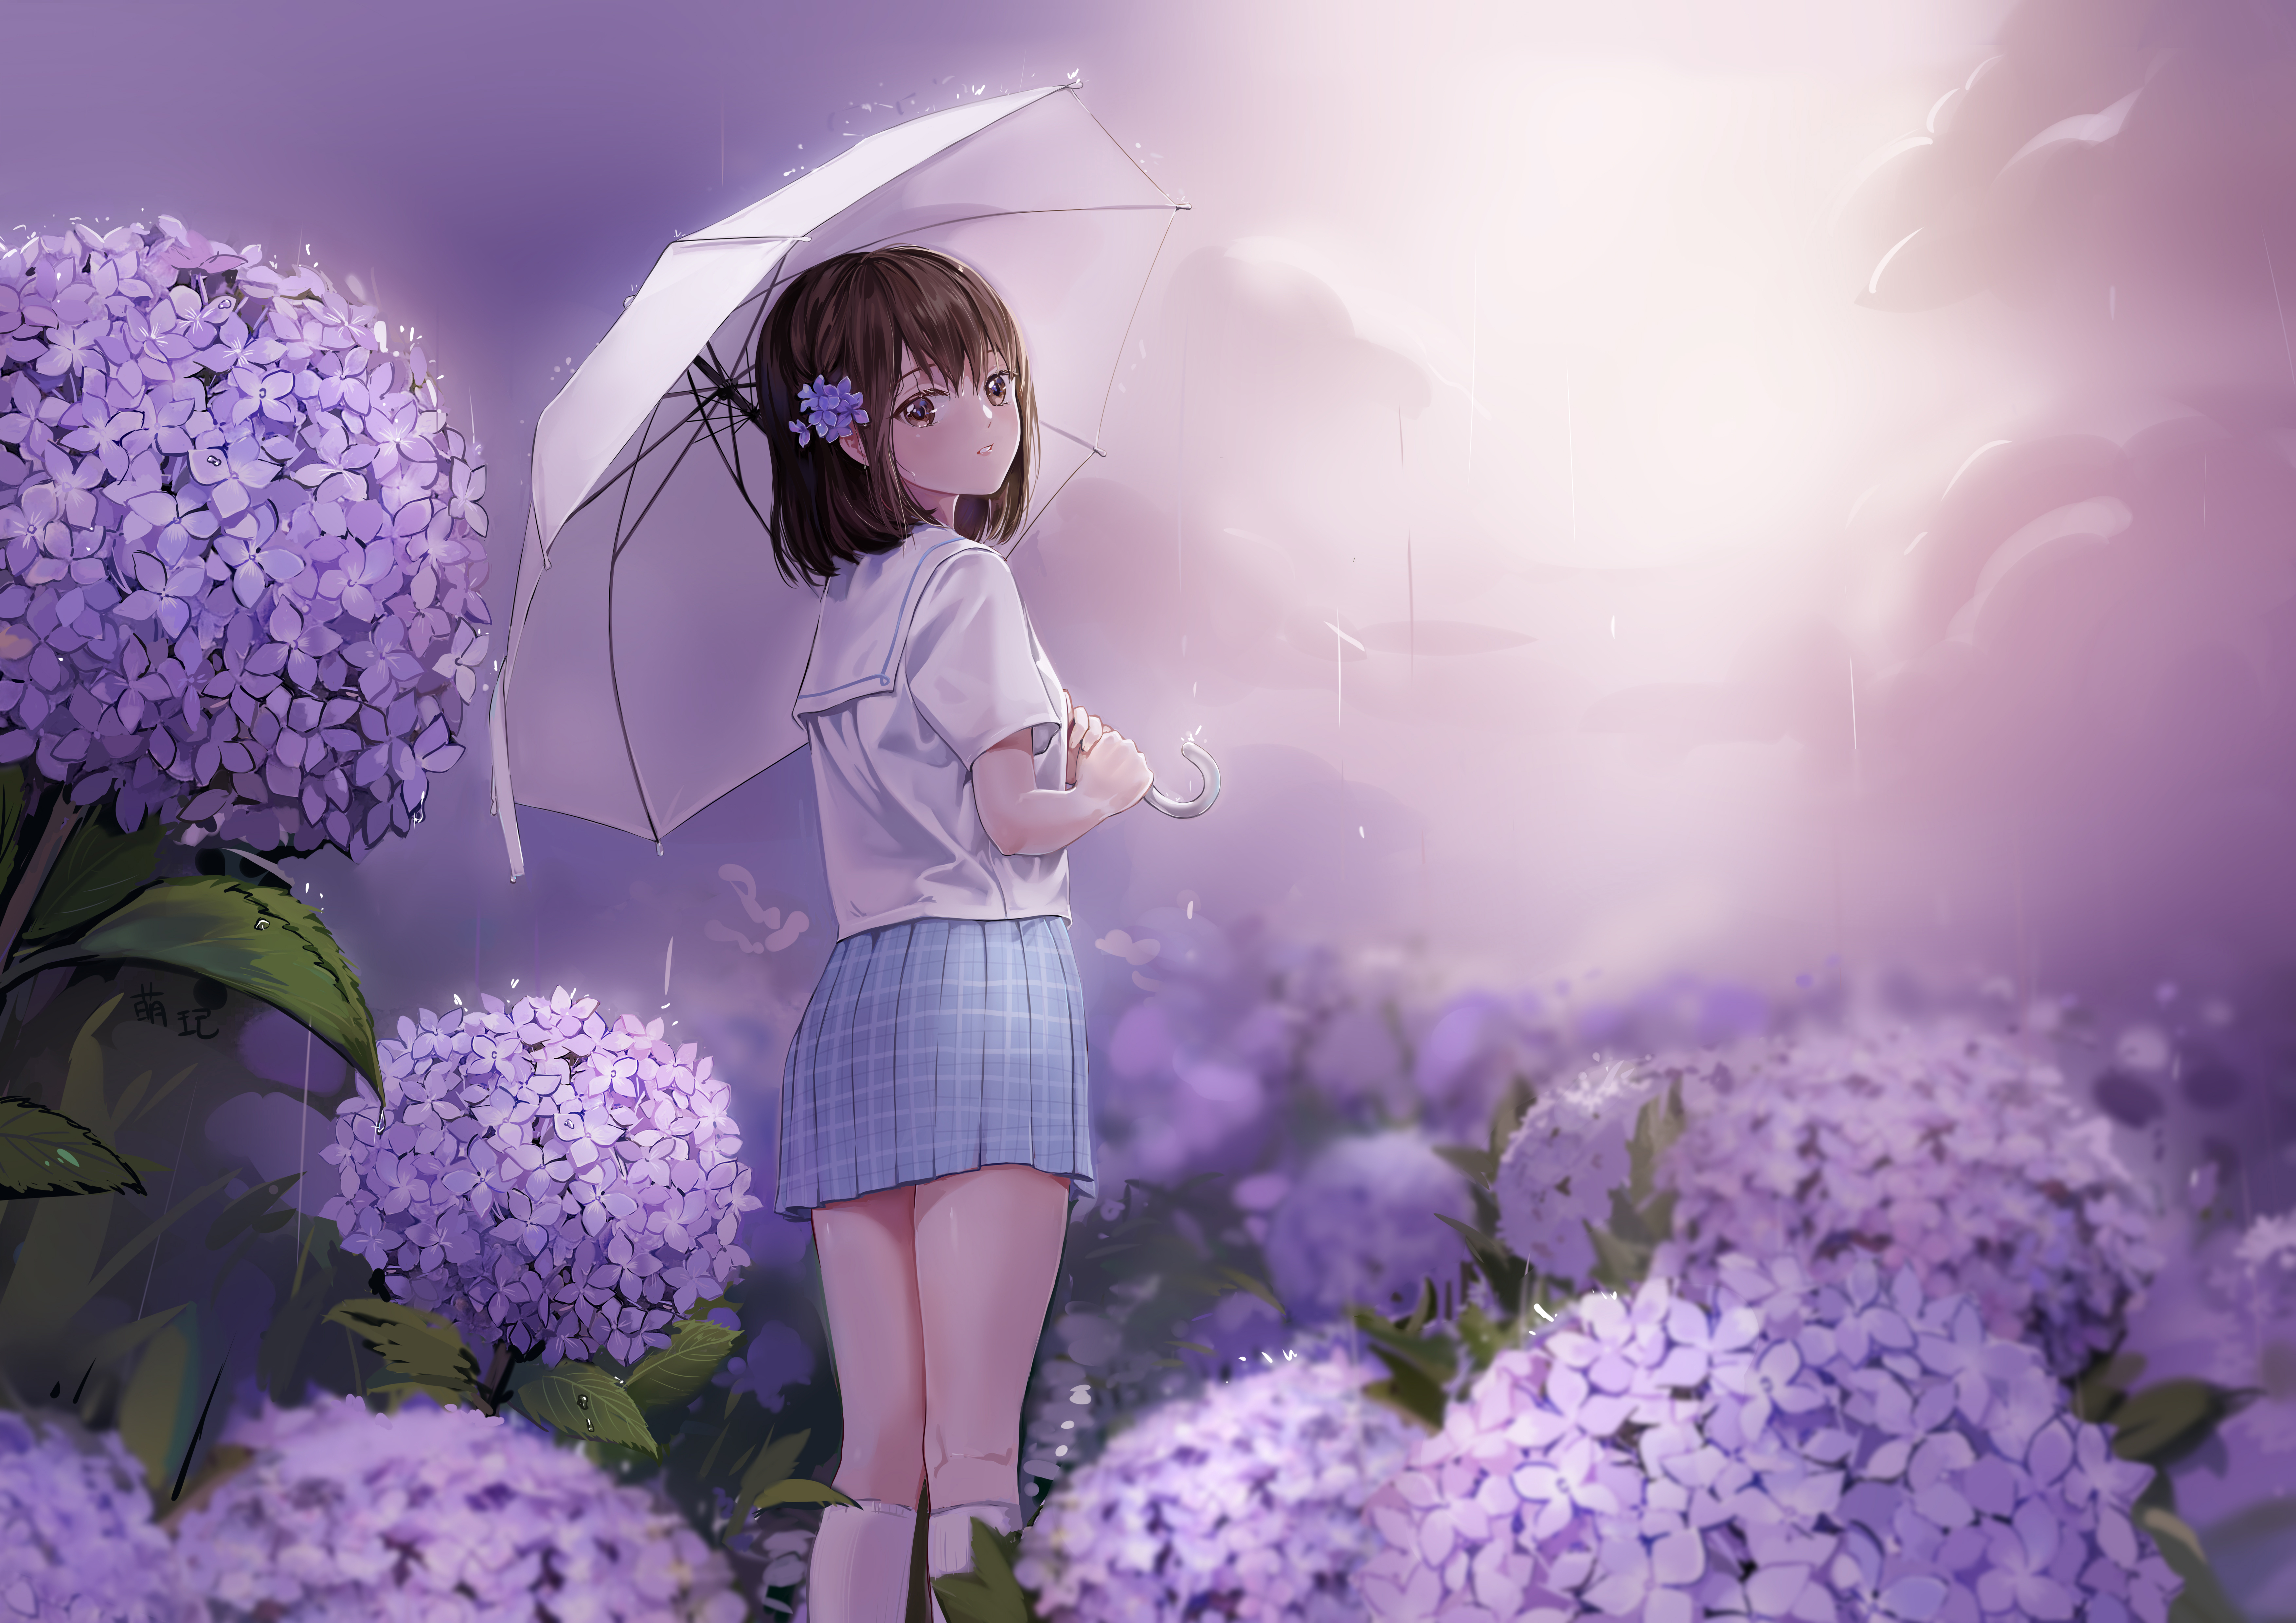 Ｄａｒｋ Ｓｔｙｌｅ - lavender aesthetic anime | Facebook